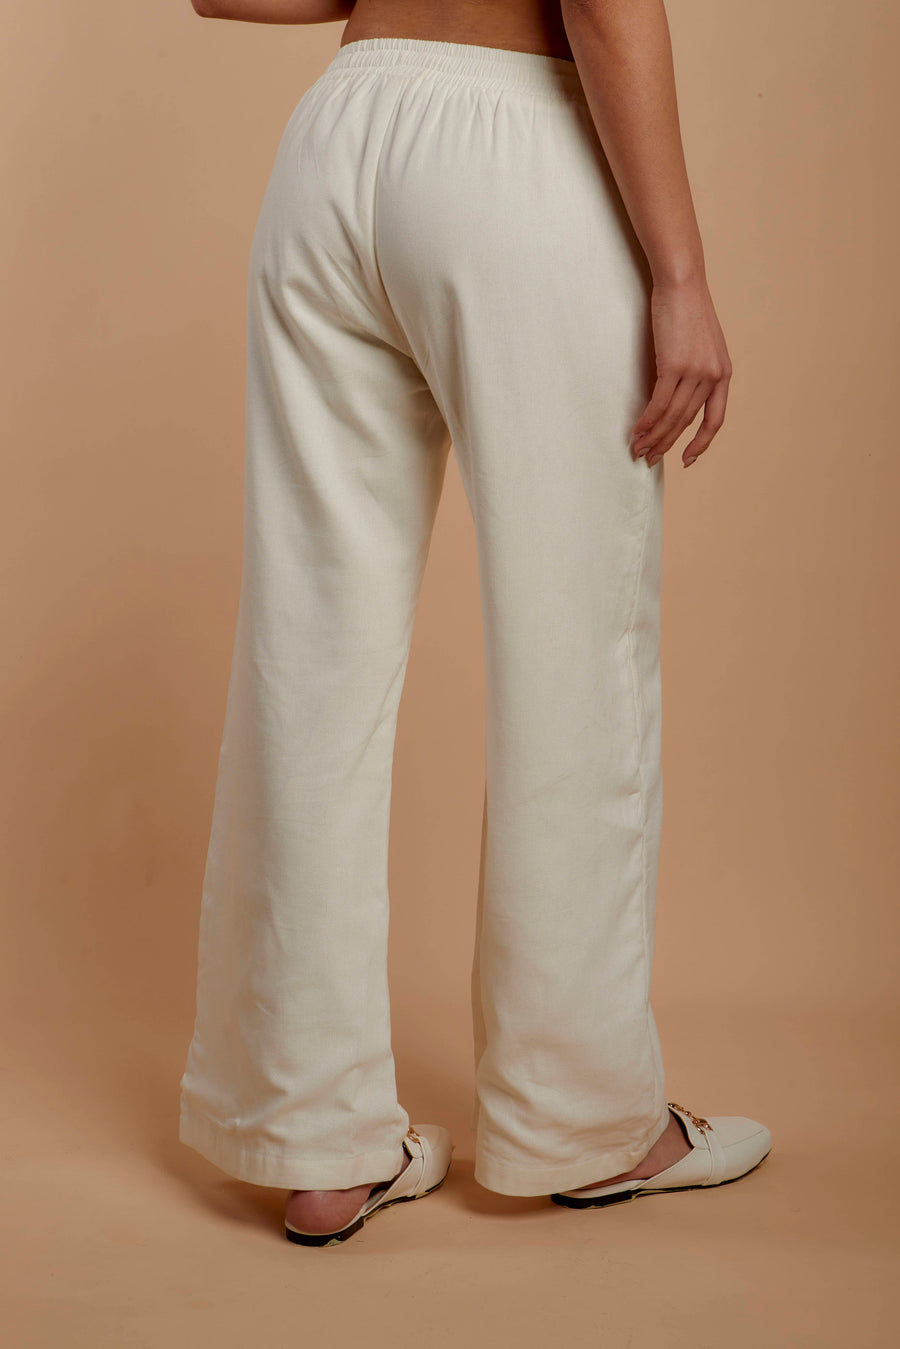 White Linen Pants (Extra coating)